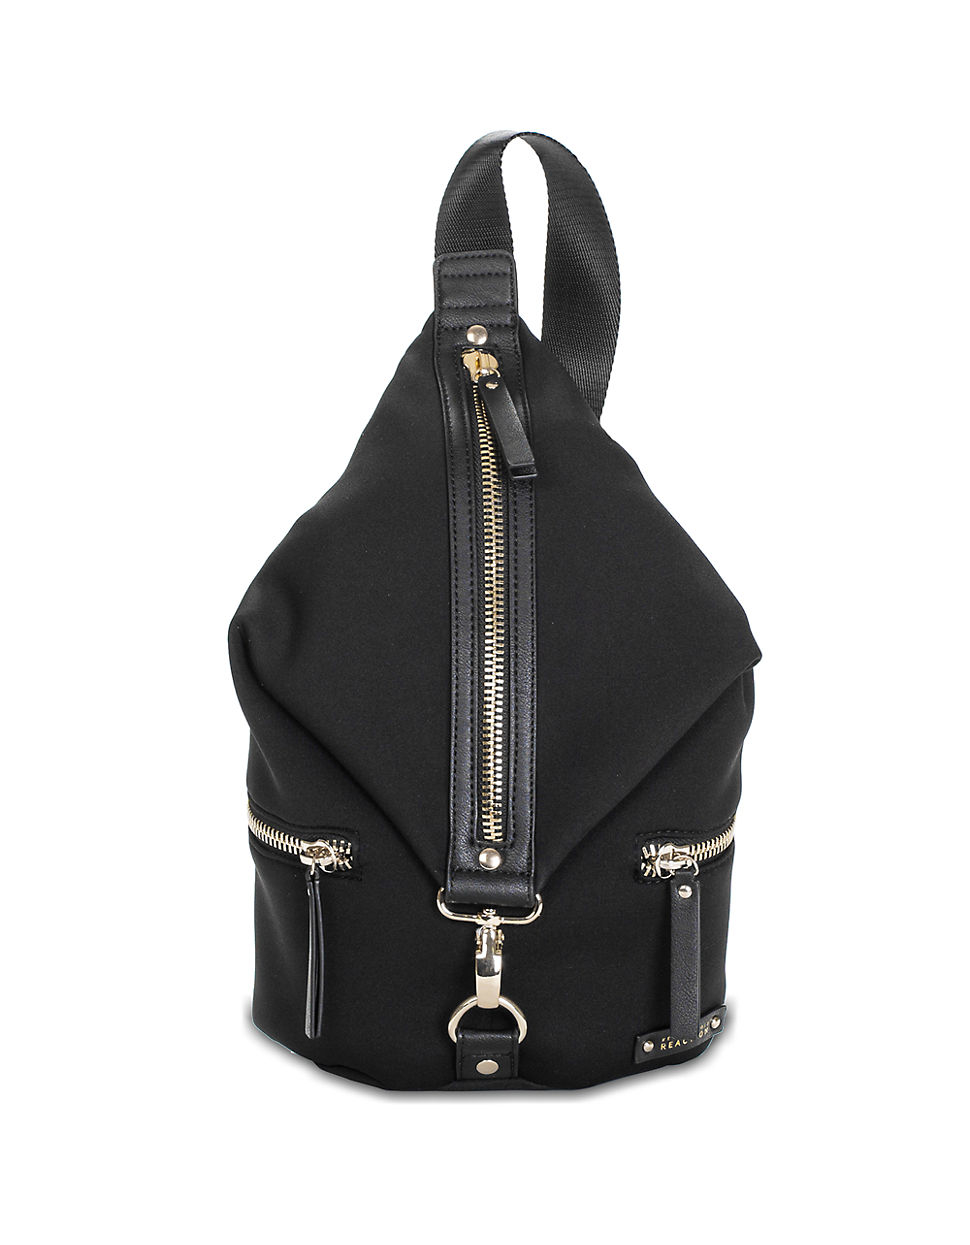 Lyst - Kenneth Cole Bondi Girl Mini Sling Bag in Black